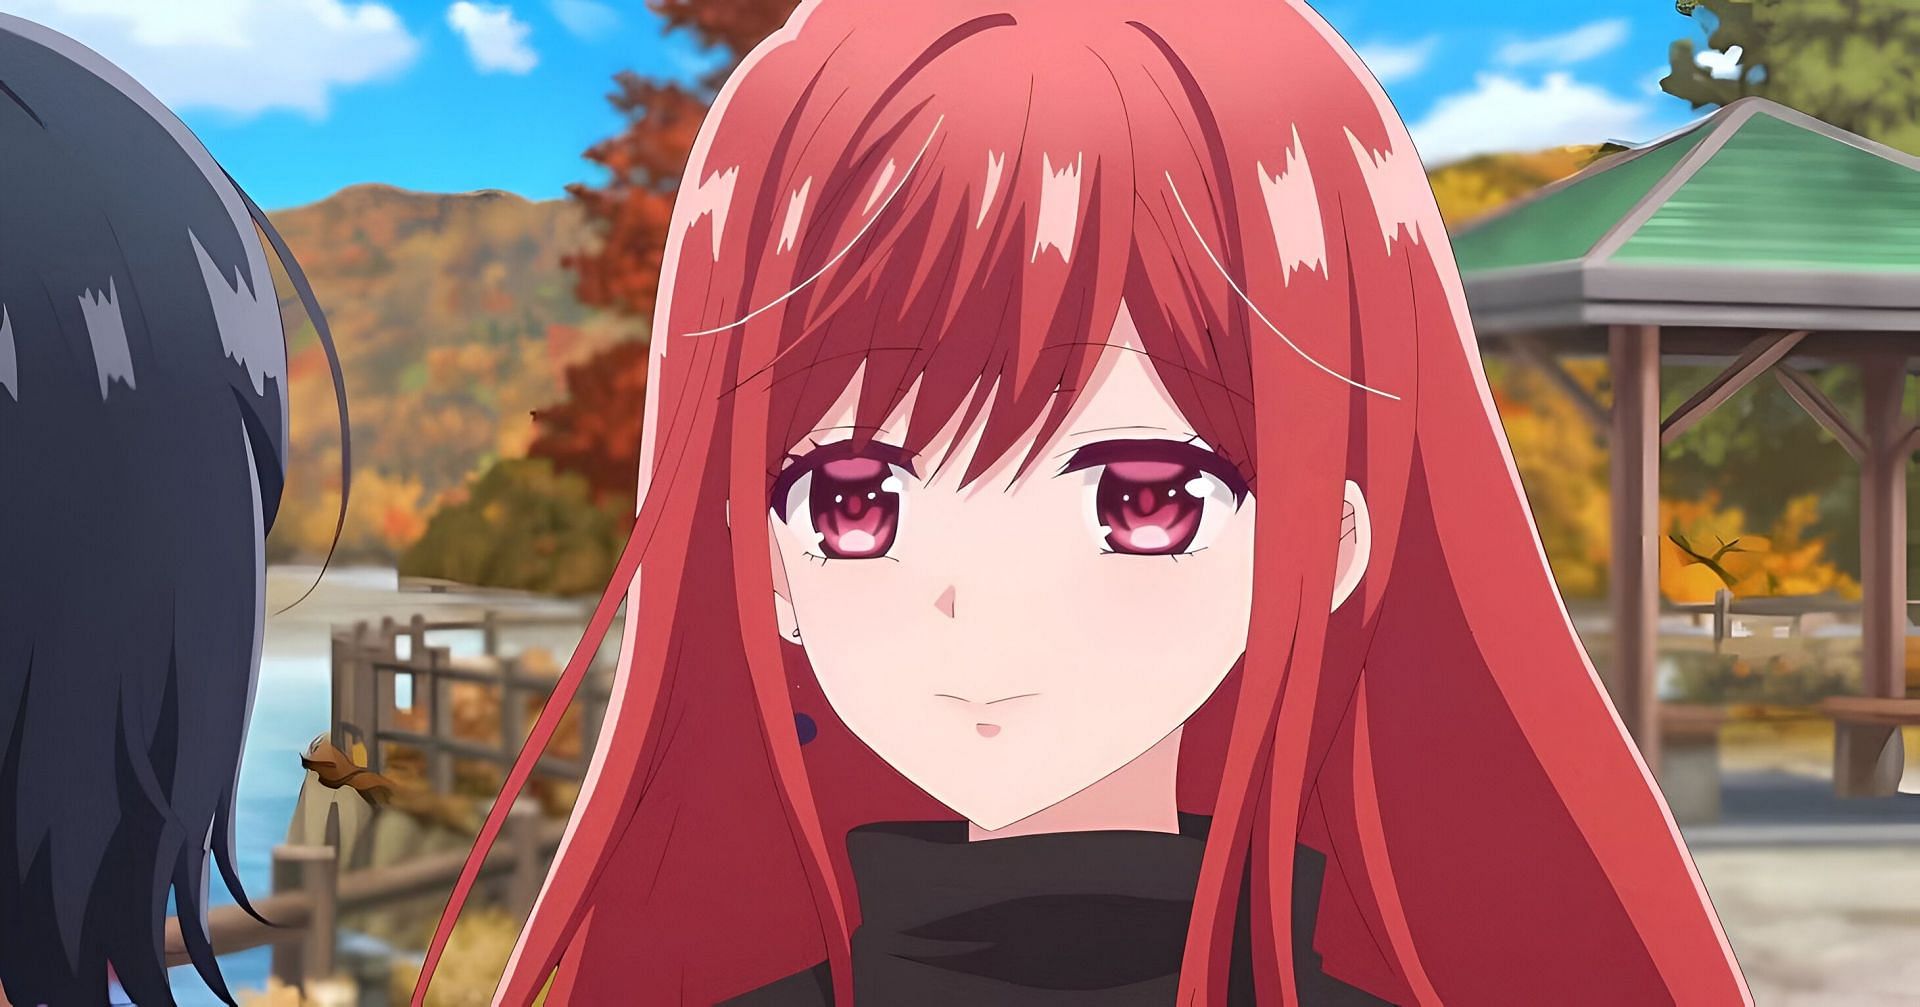 Miko as seen in the anime (Image via Studio Blanc)